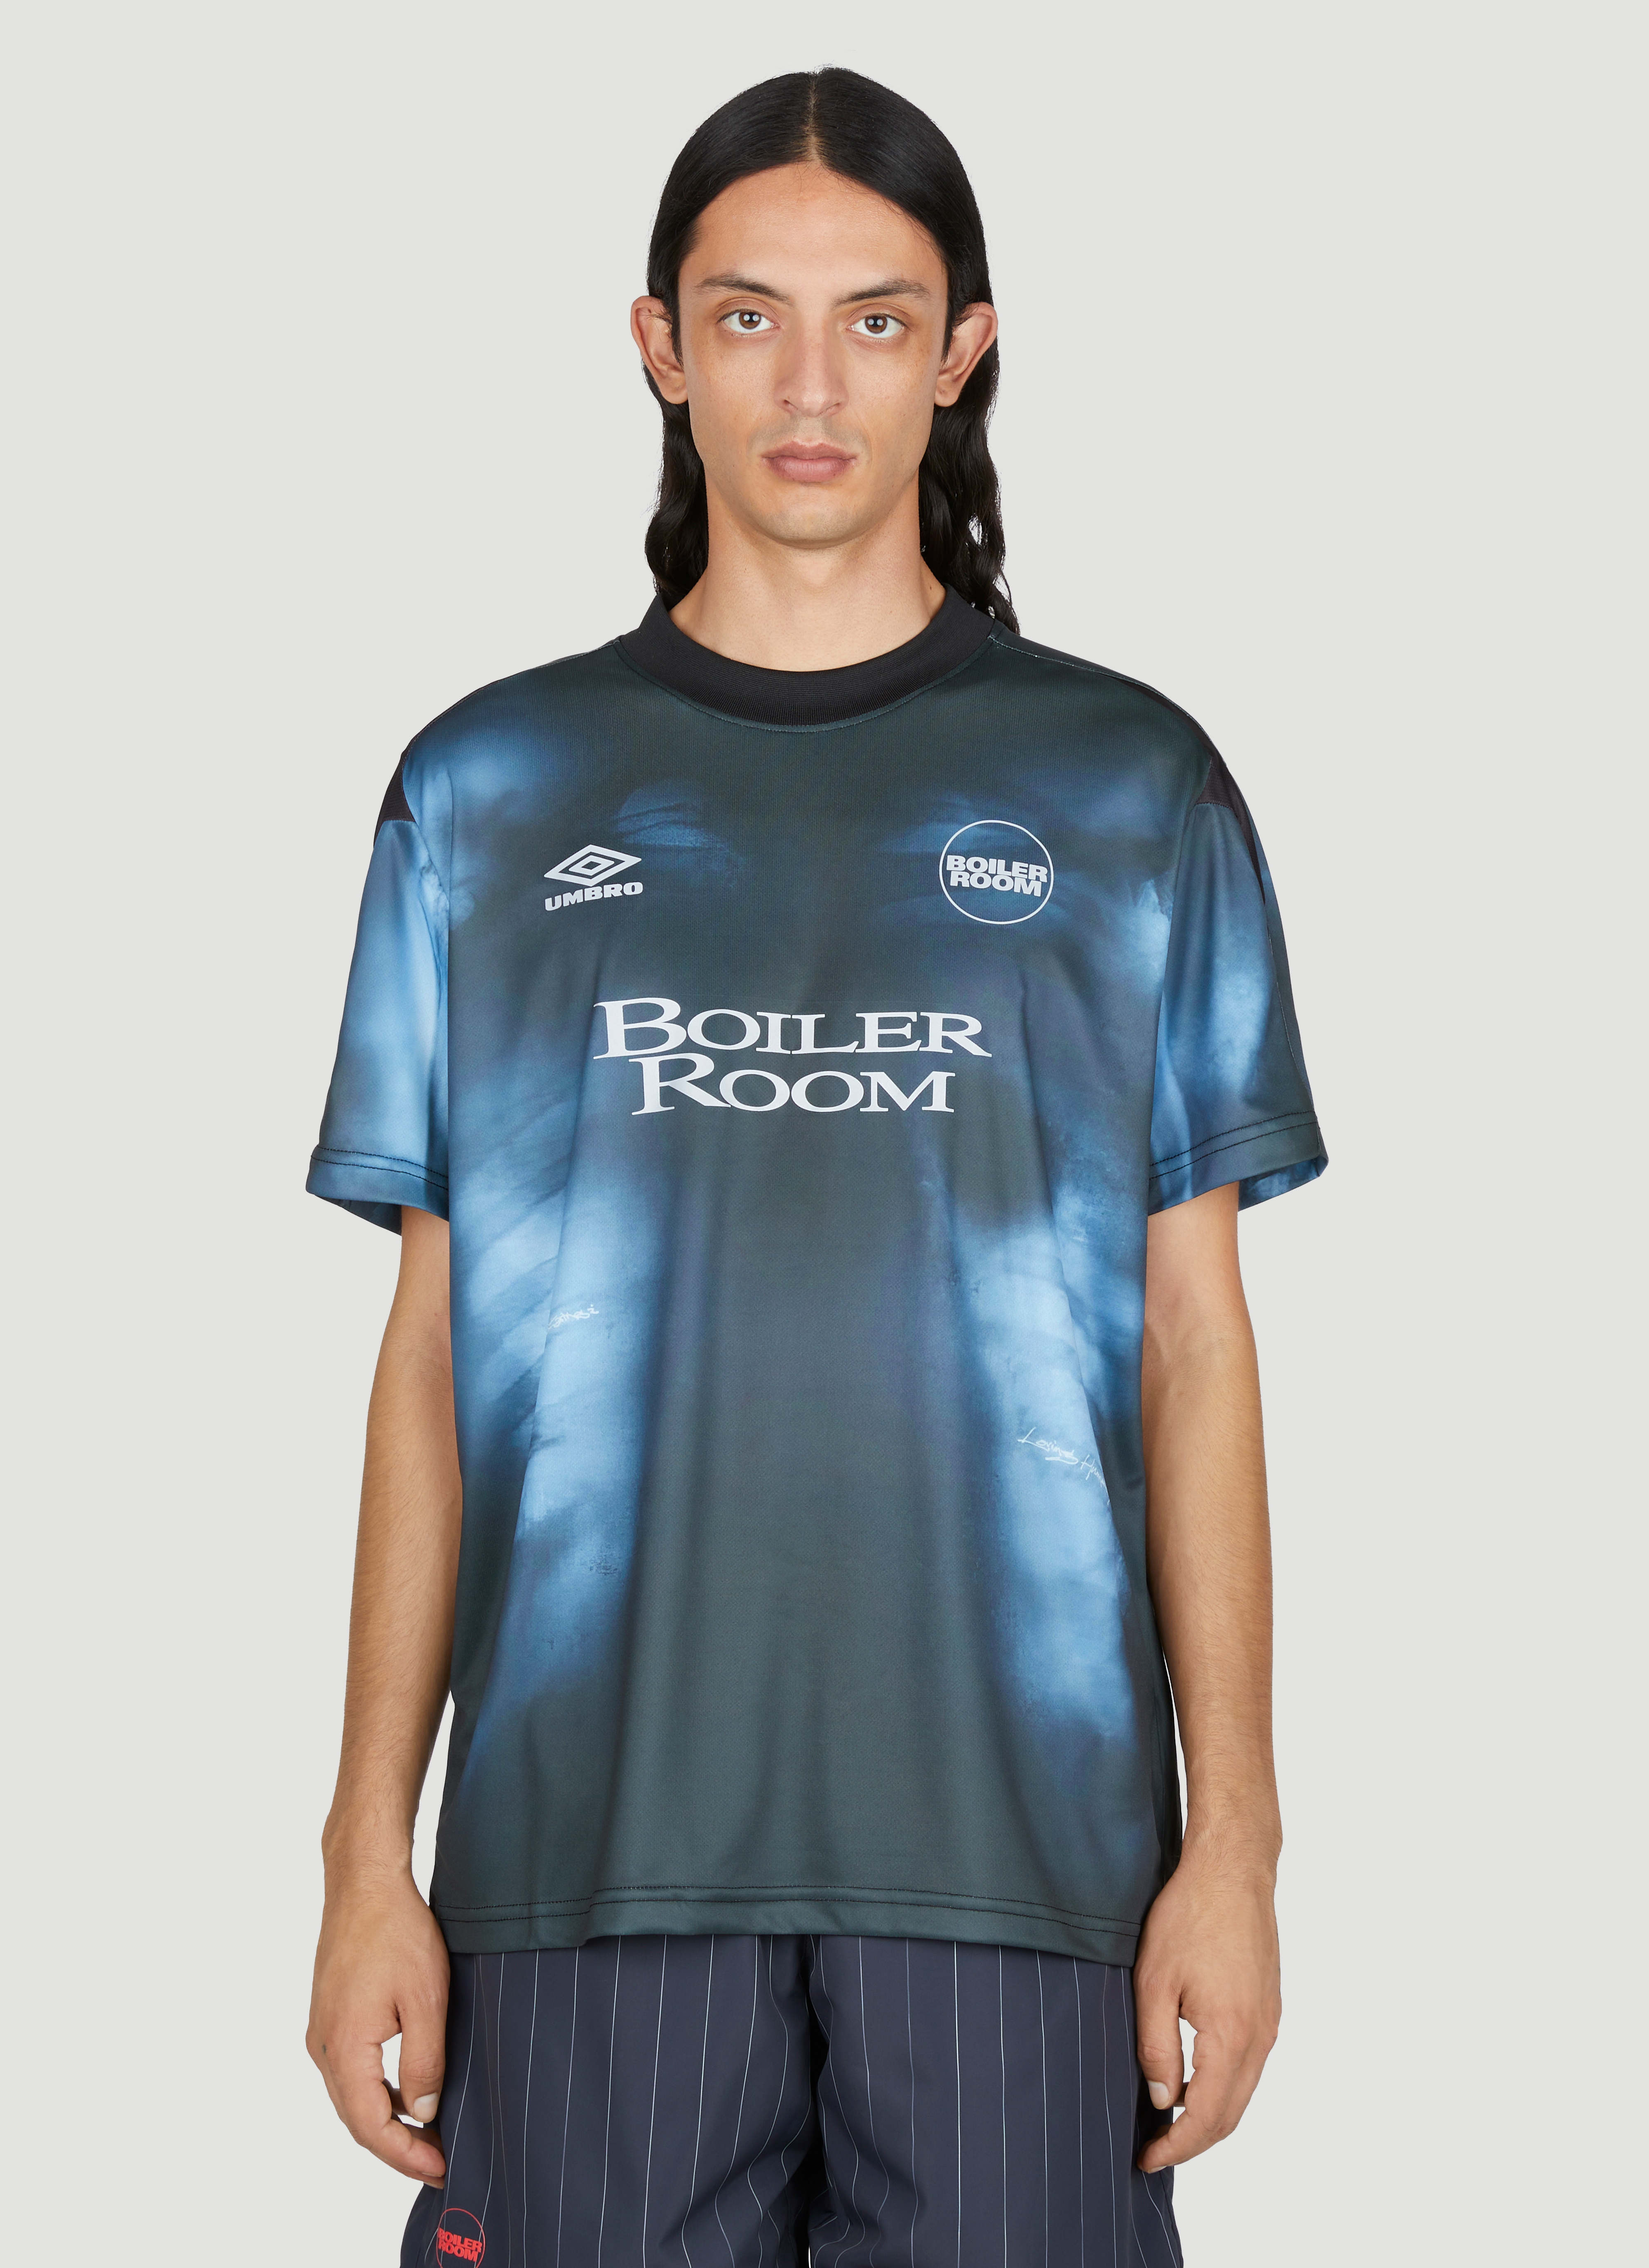 Boiler Room x Umbro Graphic Print Football T-Shirt in Black